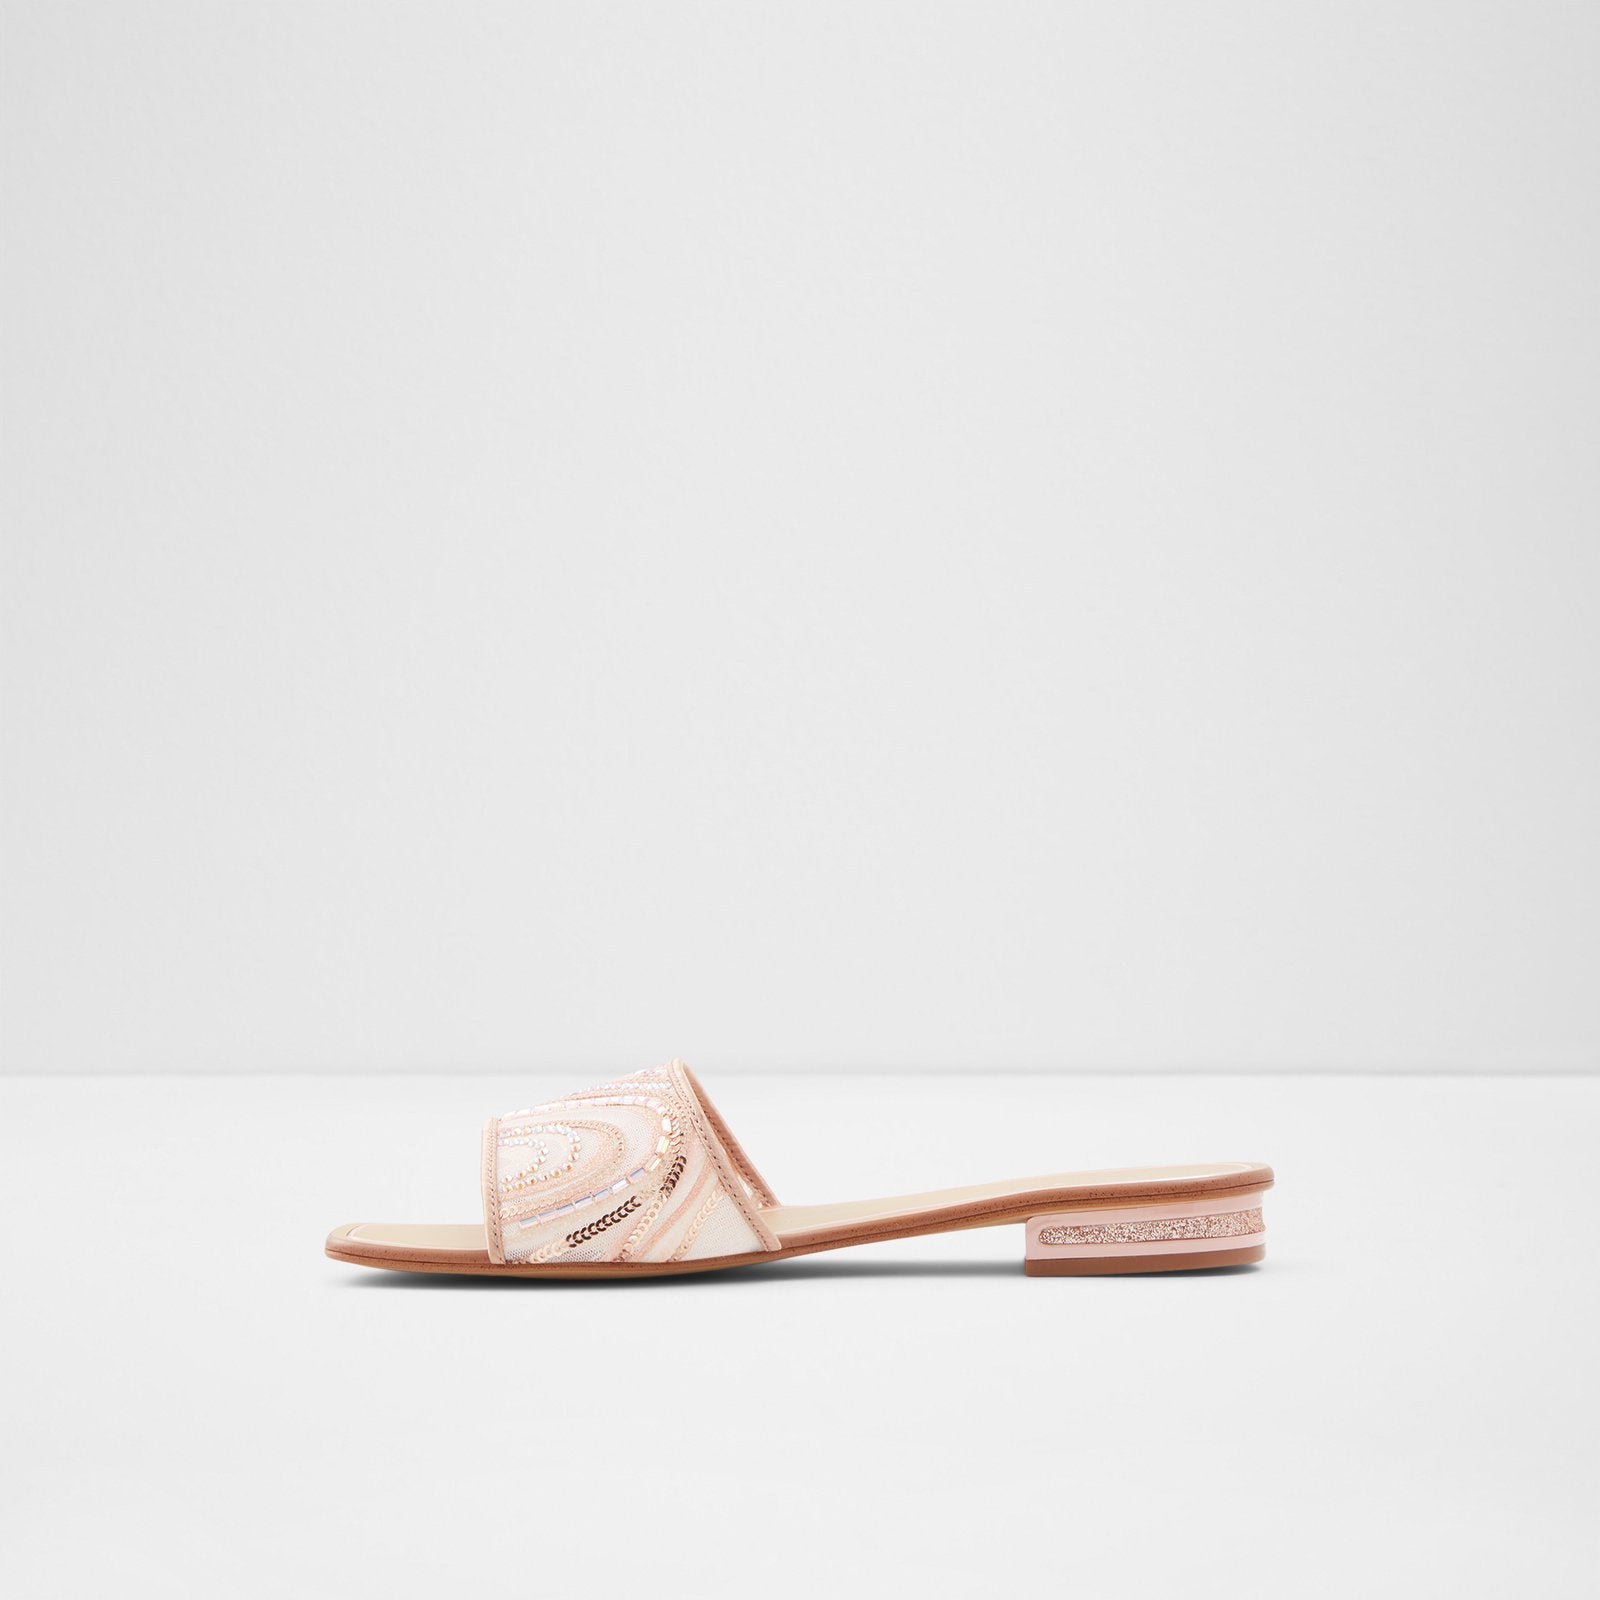 Oledia / Dress Sandals Women Shoes - Light Pink - ALDO KSA